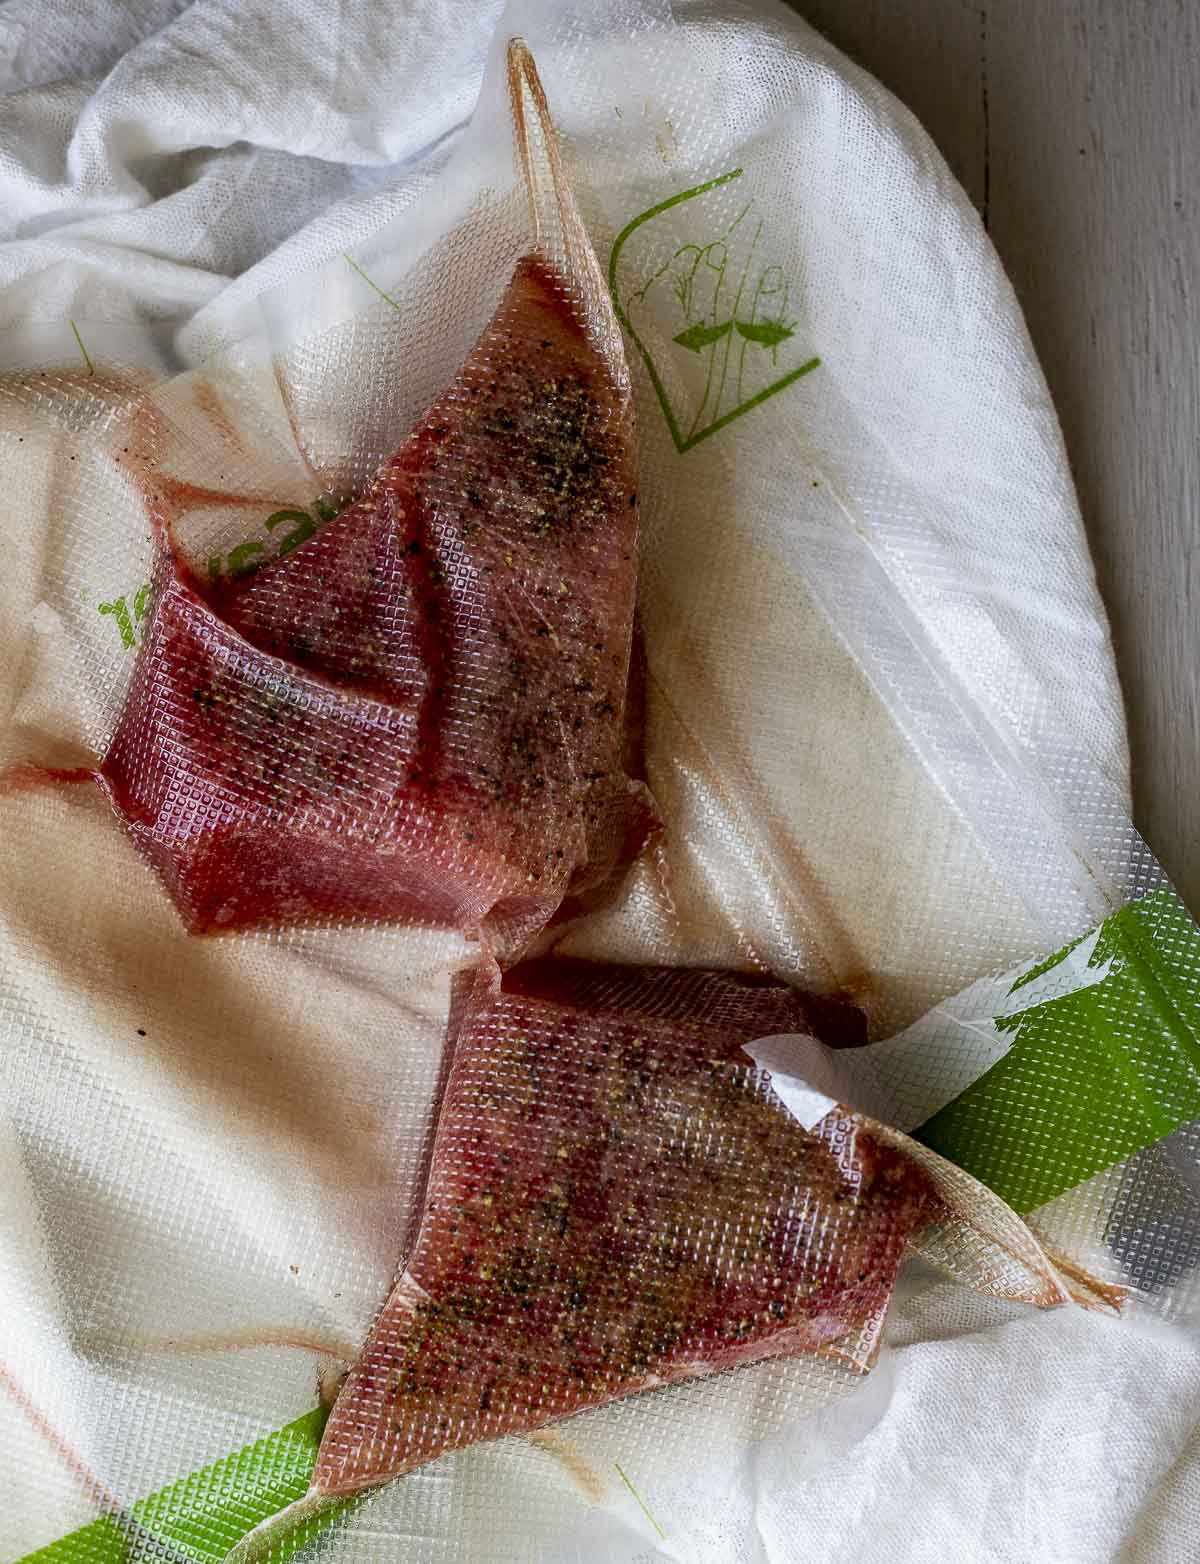 Two tuna steaks vacuum sealed in a bag.